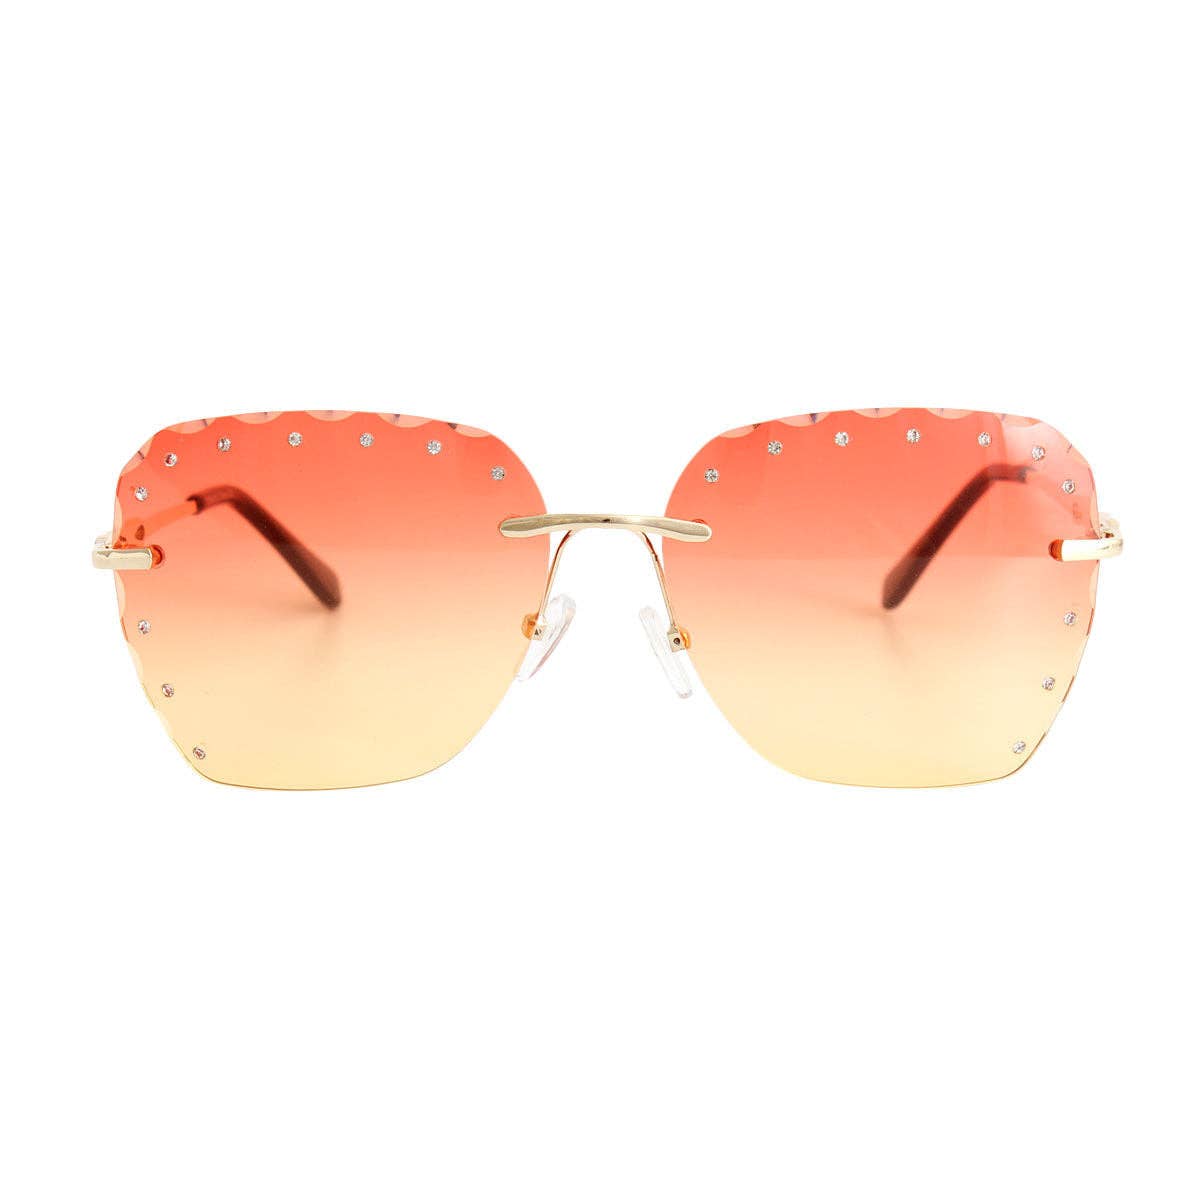 Orange Diamond Cut Sunglasses: 5.65 x 2.15 inches / Orange / Multi Tone